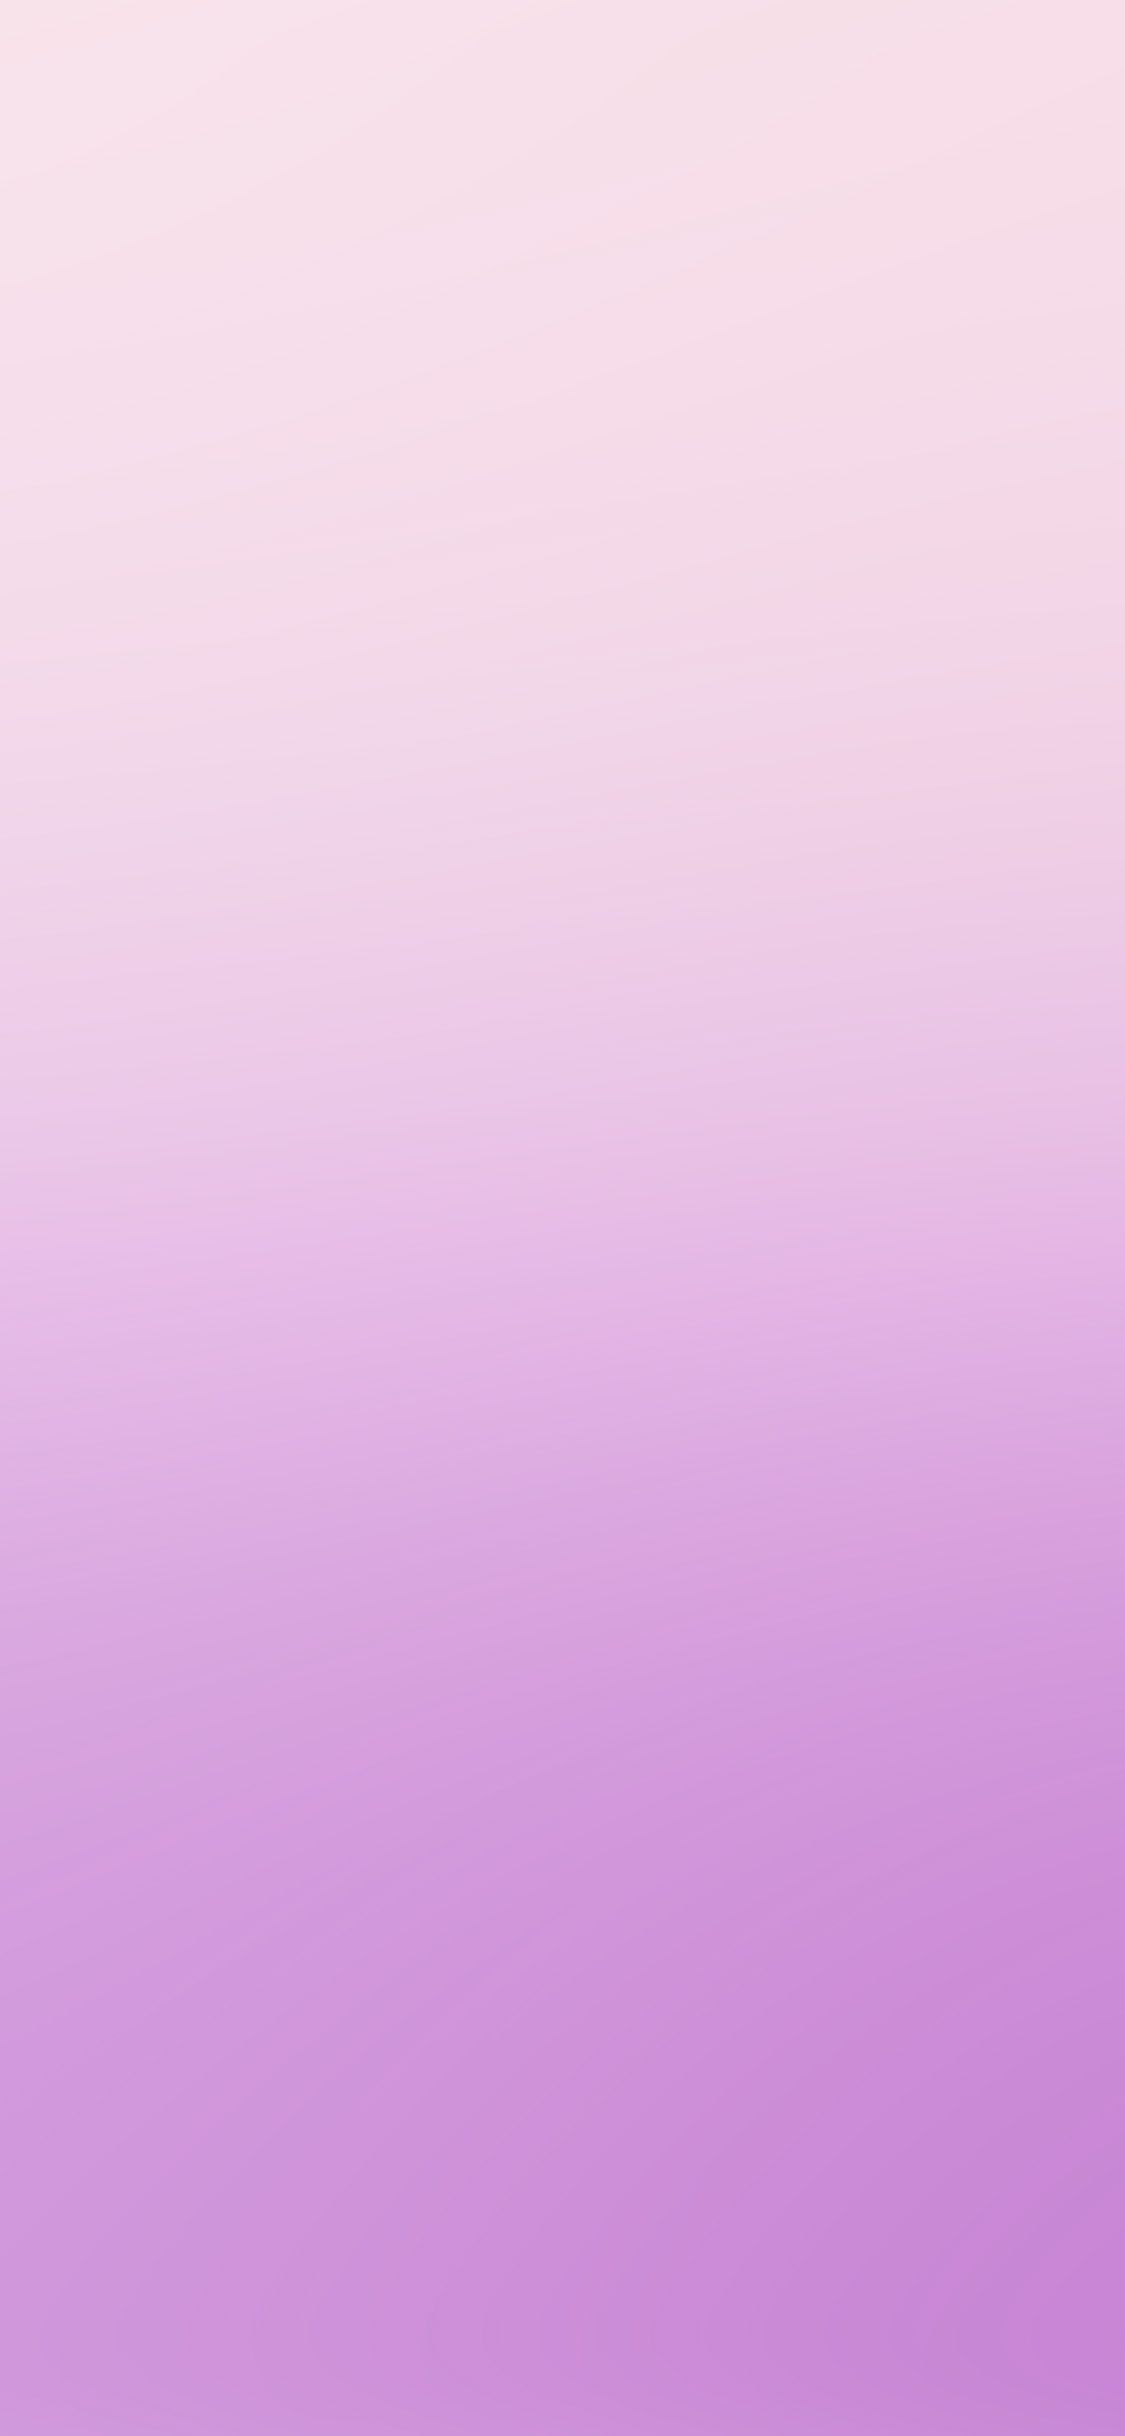 iPhone X wallpaper. soft pastel violet blur gradation